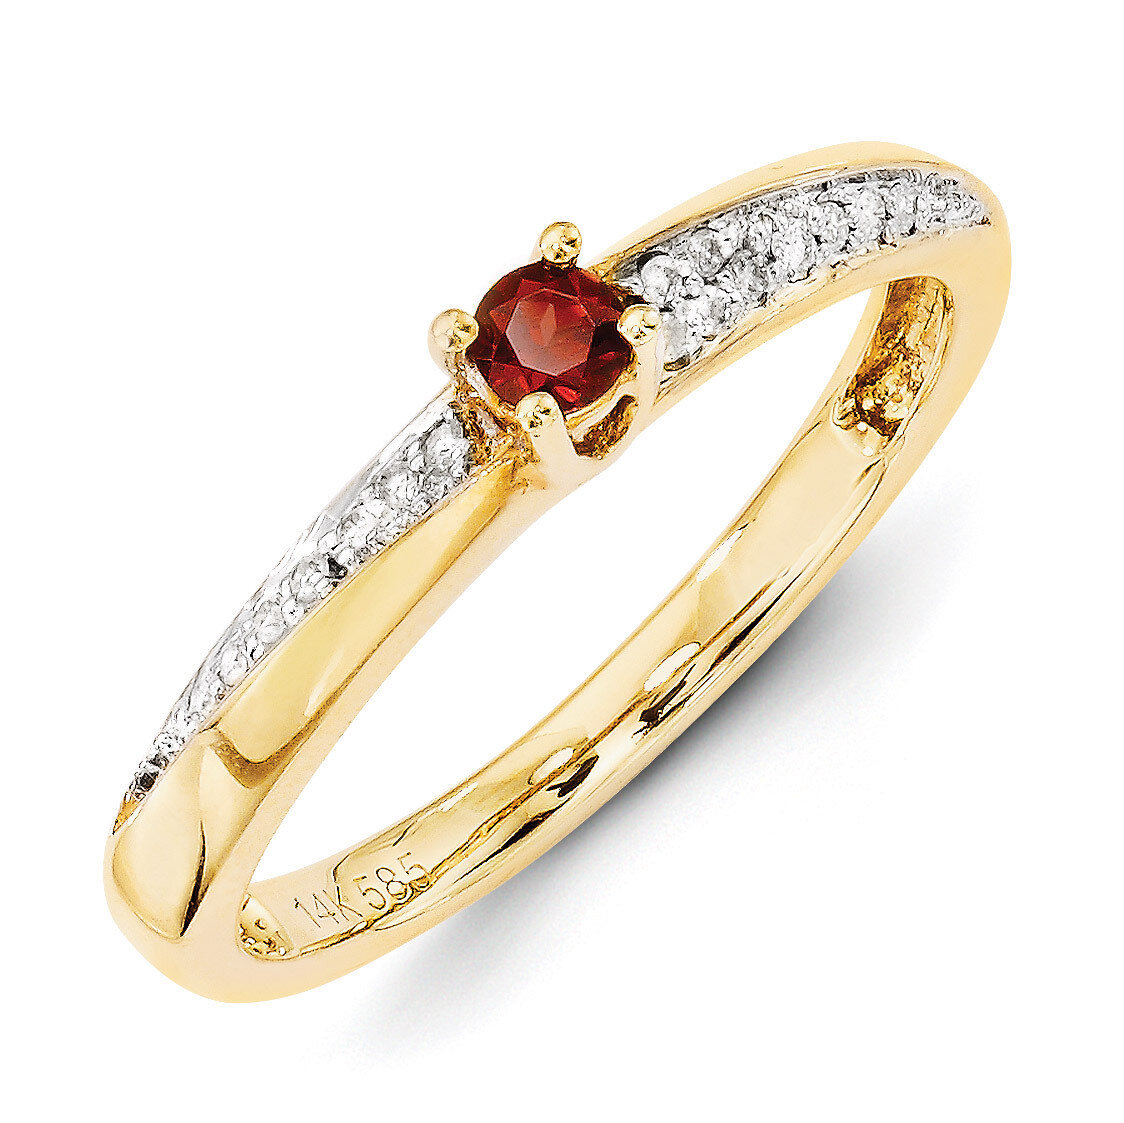 1 Birthstone Family Jewelry Diamond Semi-Set Ring 14k Yellow Gold XMR36/1